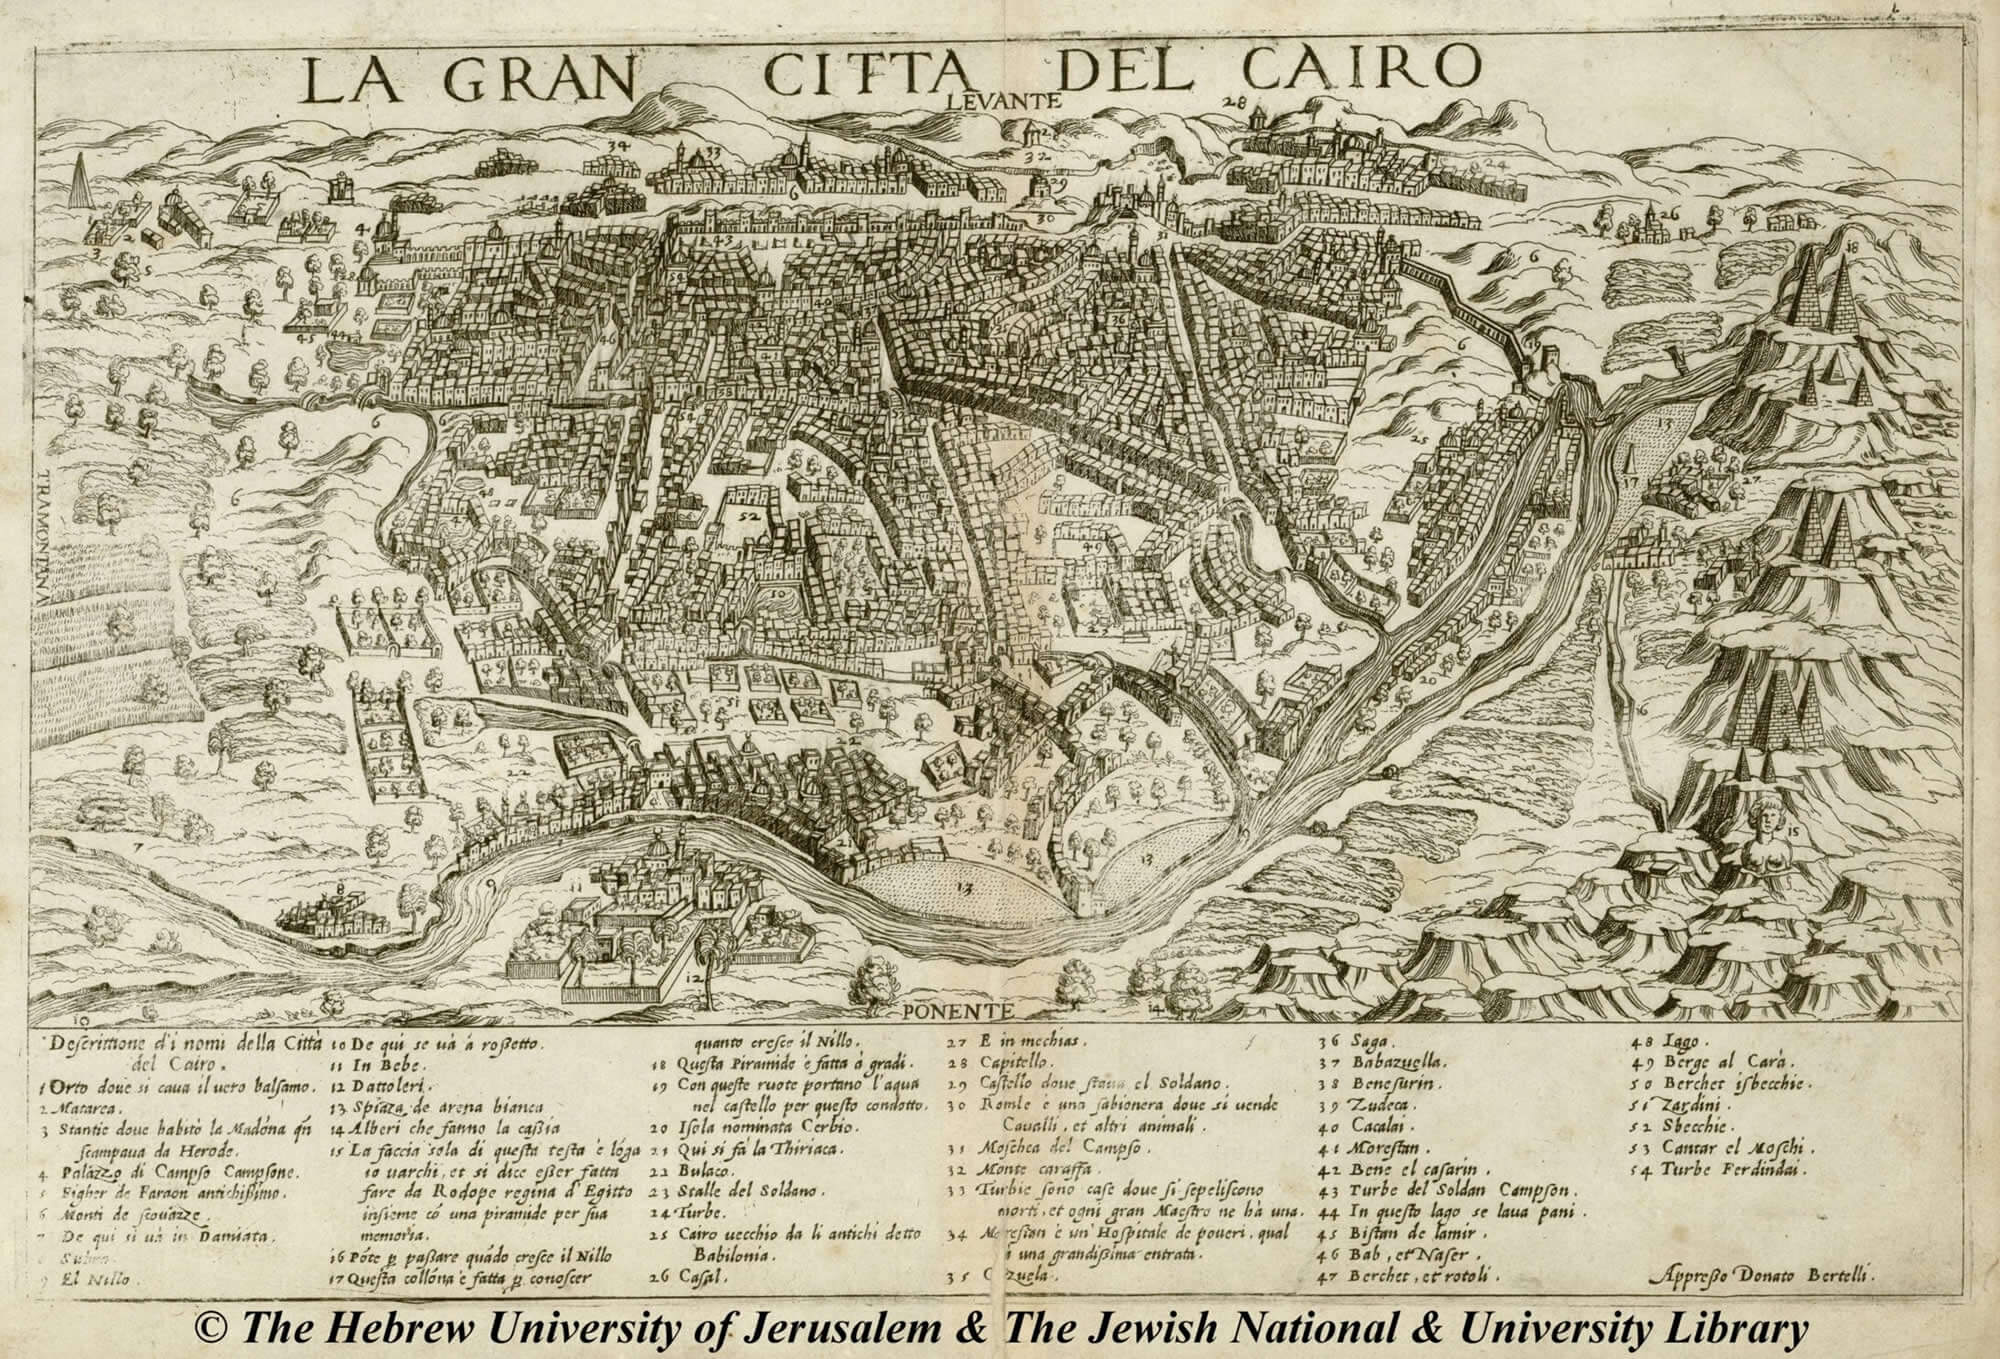 antique greater city carte du cairo